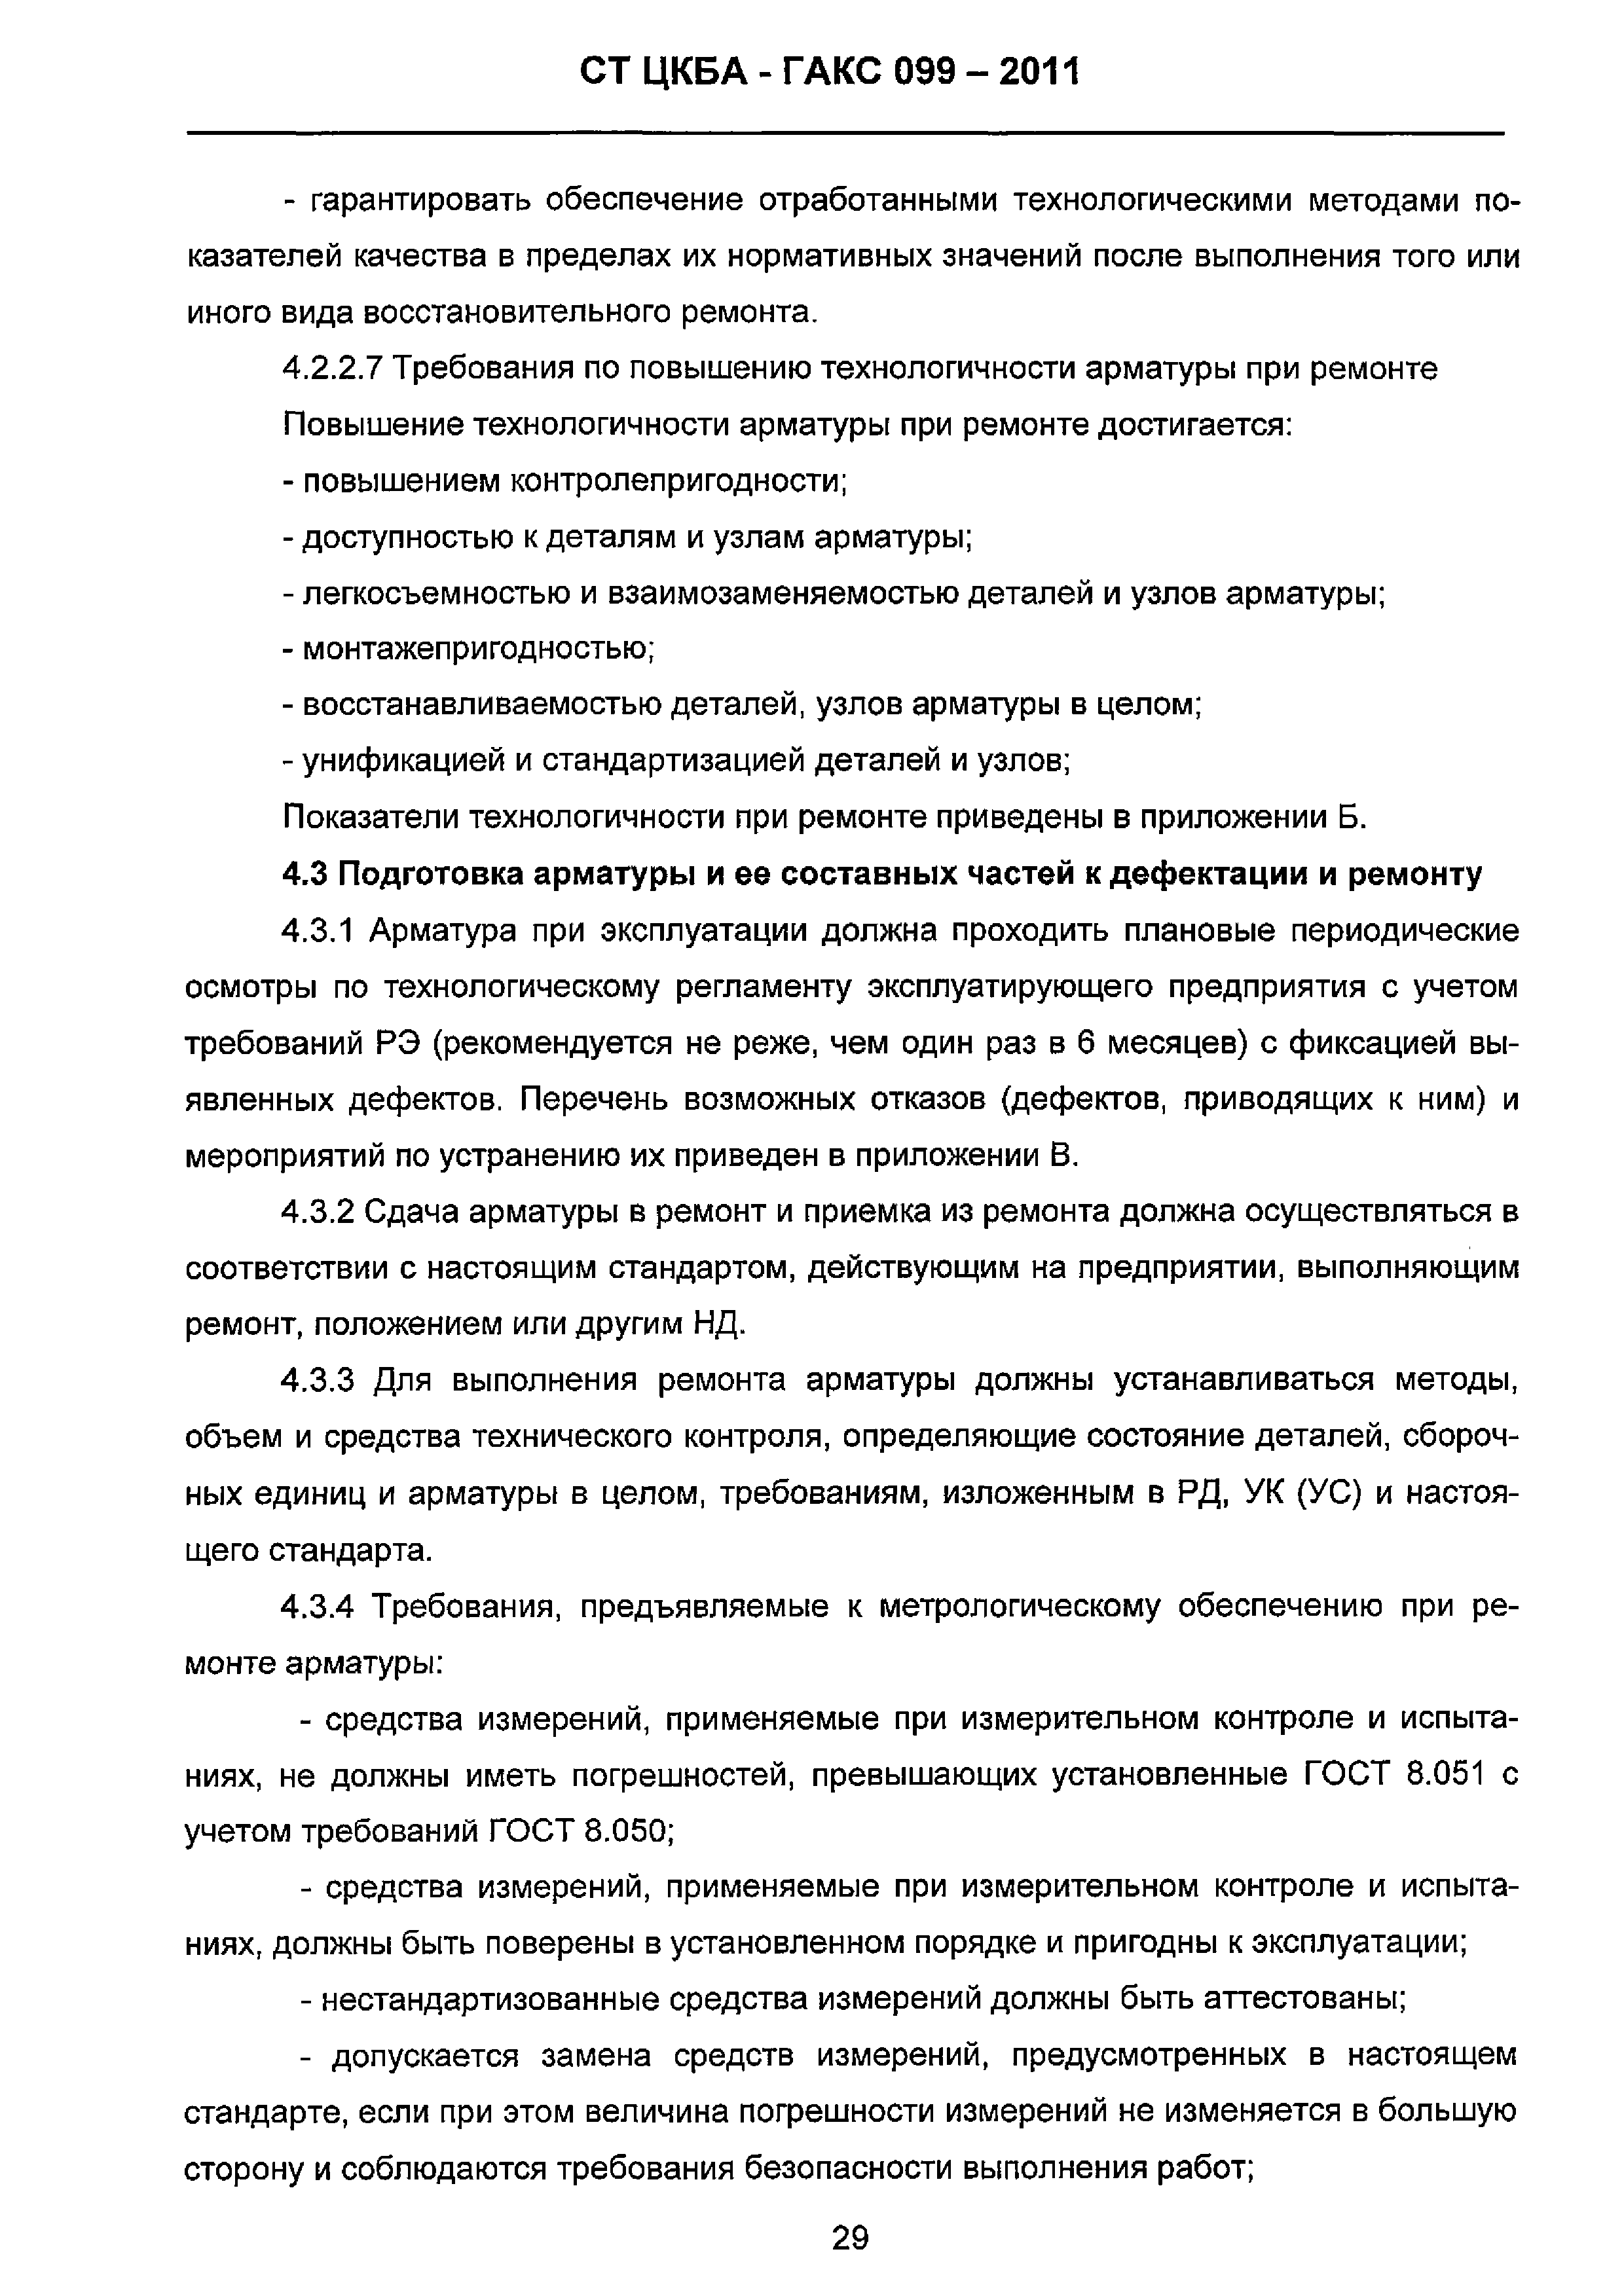 СТ ЦКБА 099-2011